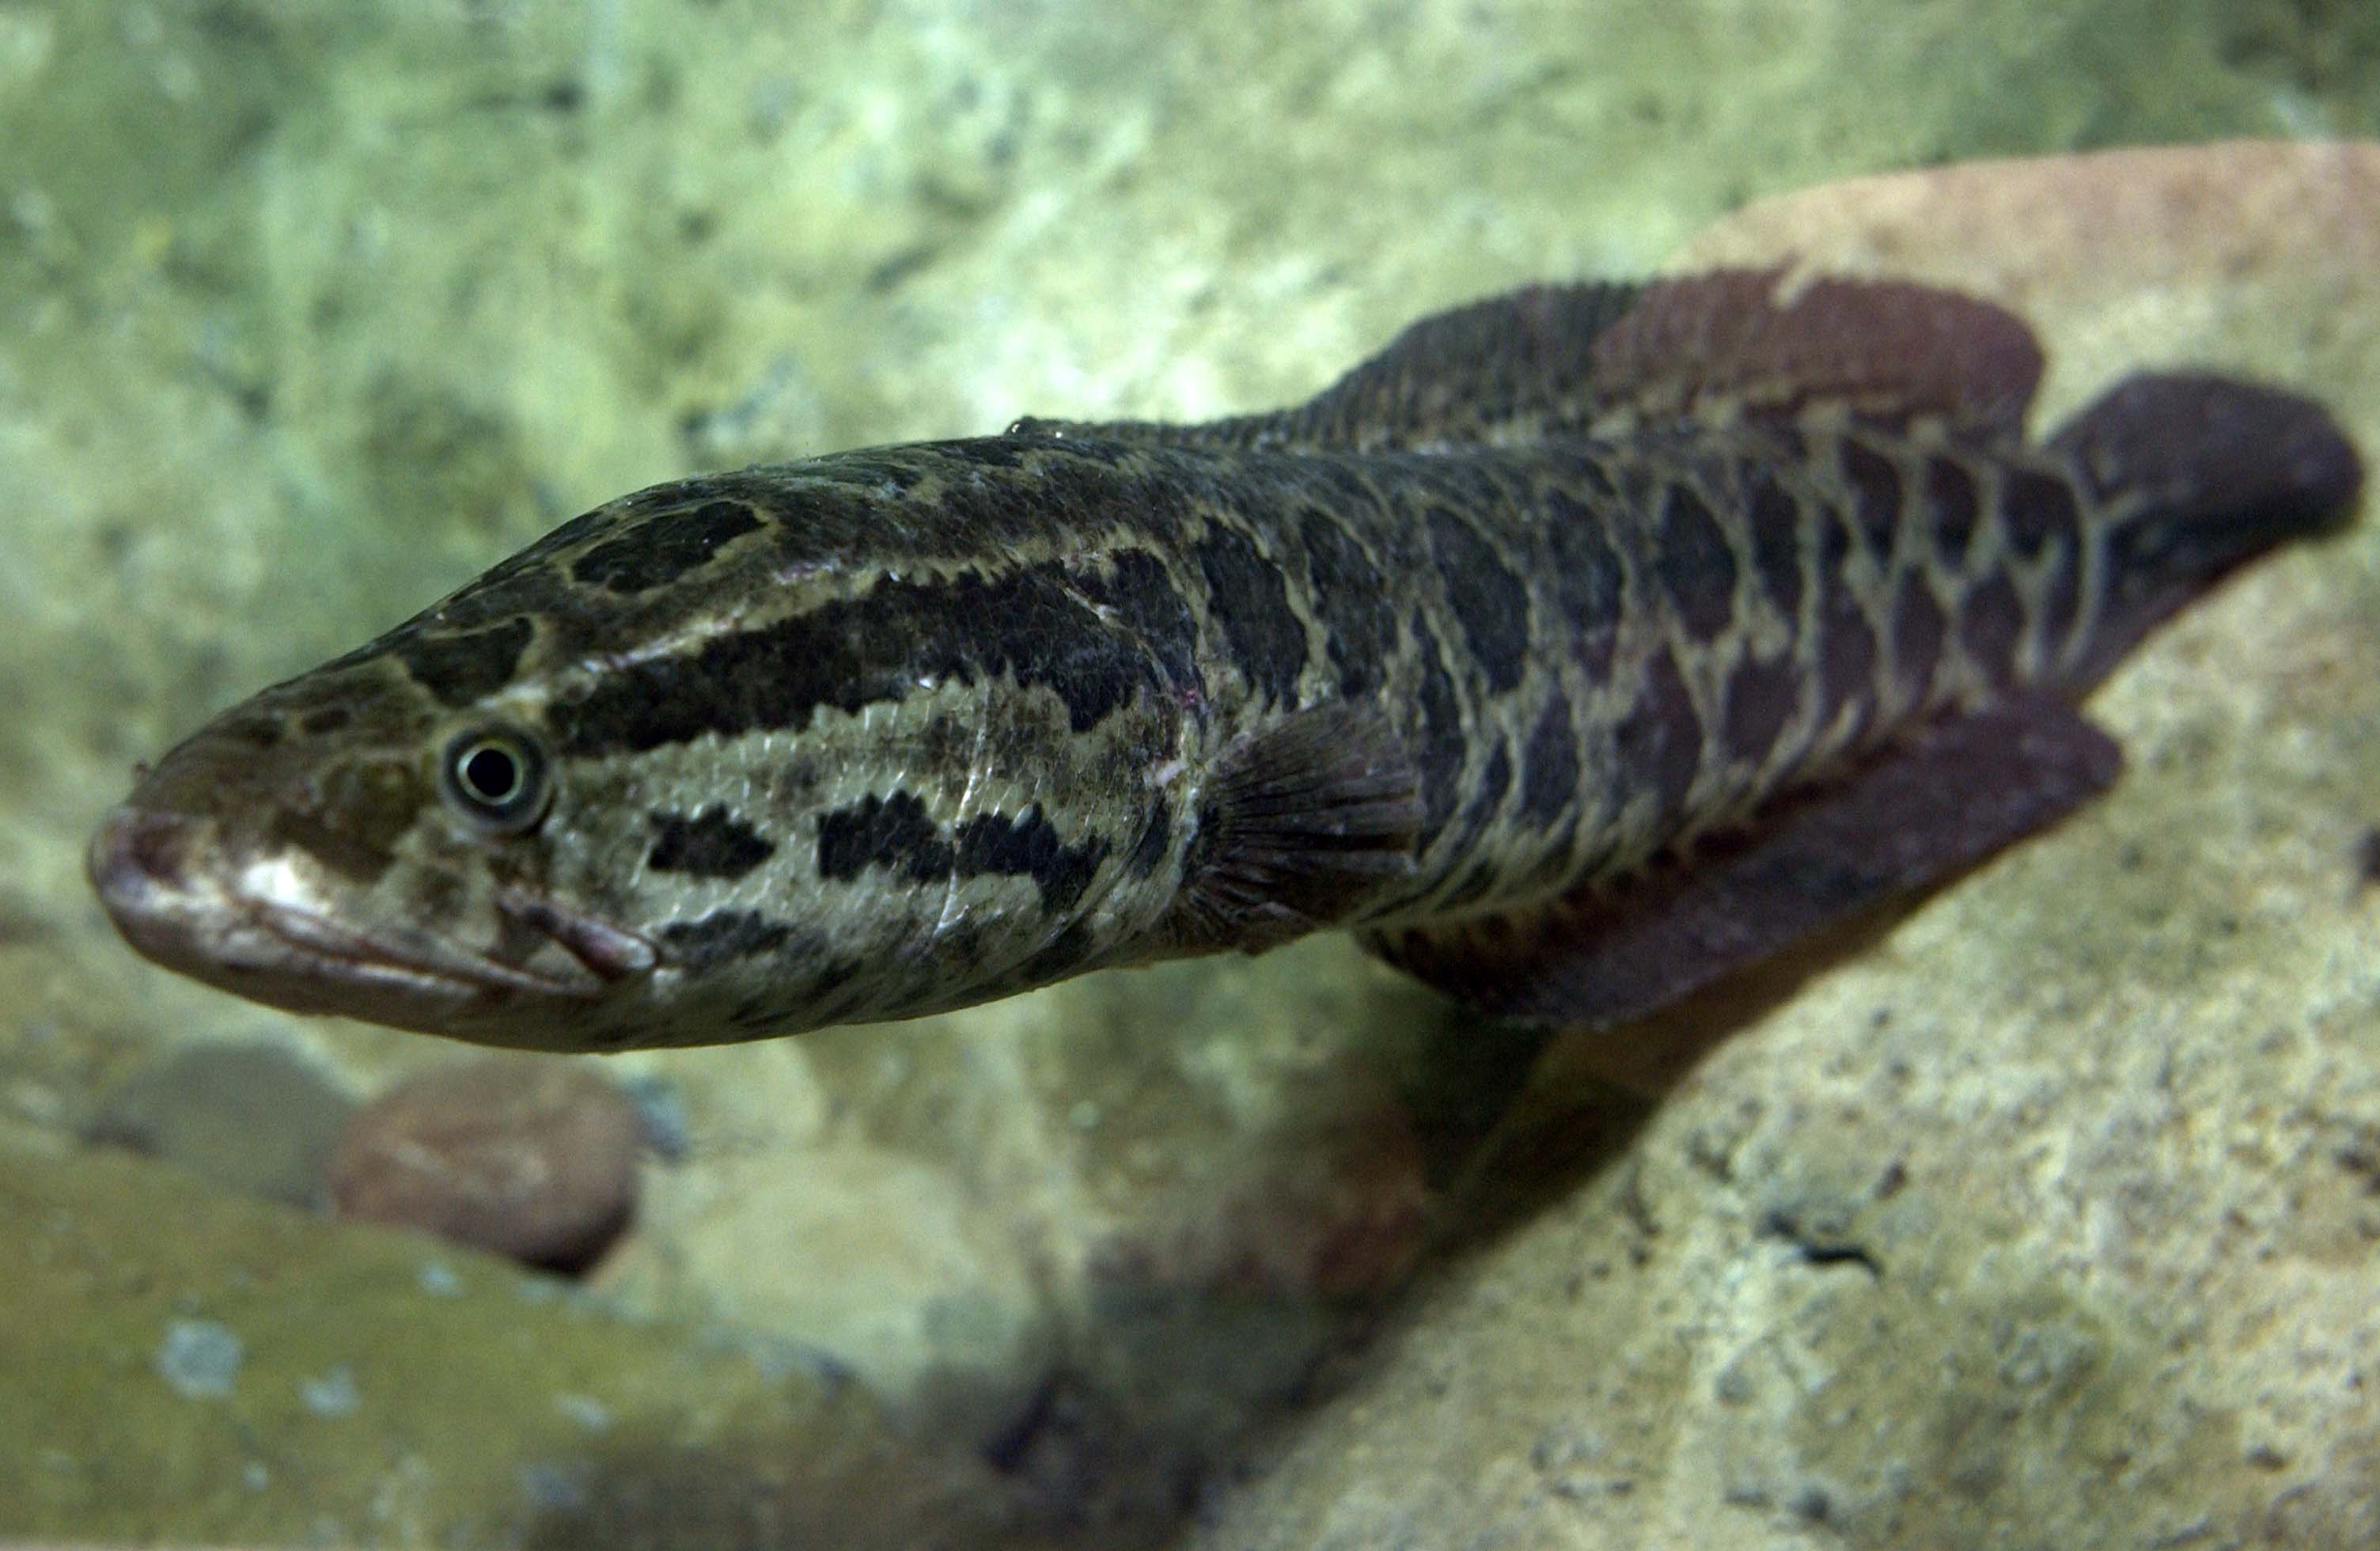 Photo Calvert Marine Museum - Snakehead invasive species